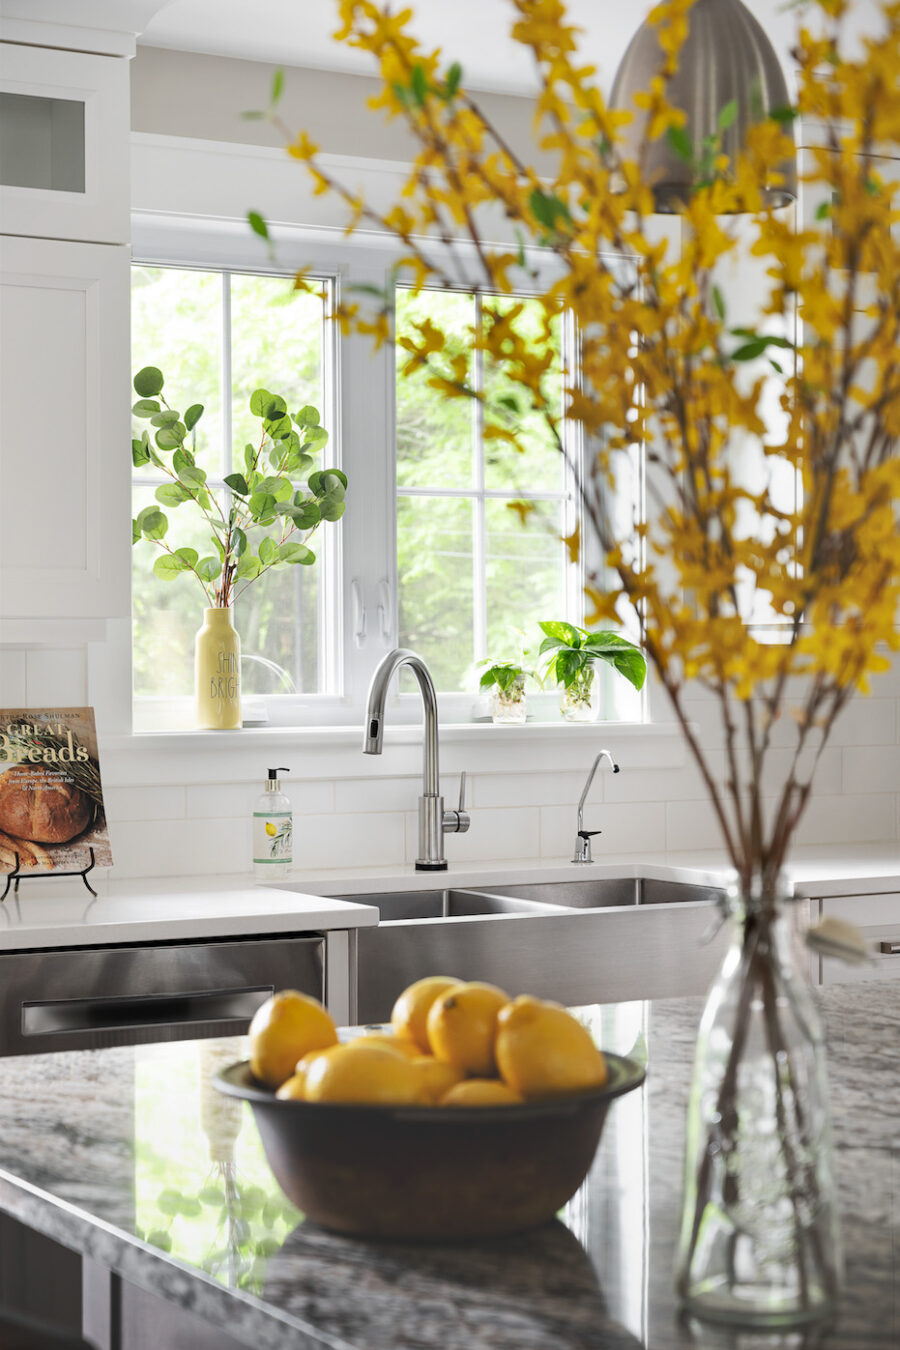 kitchen-design-yellow-flowers-bowl-of-lemons